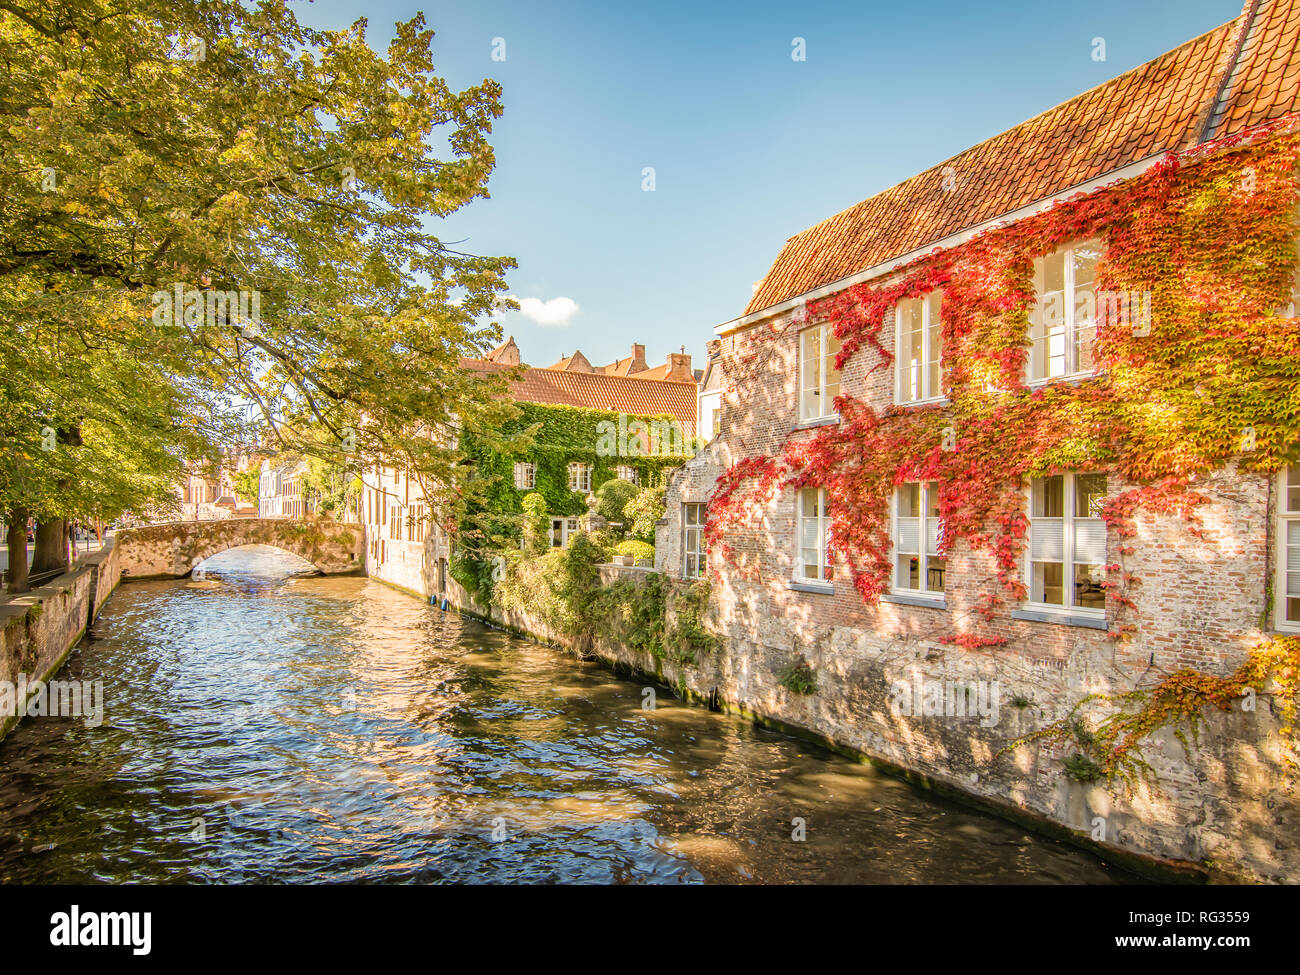 Medieval and romantic Bonifacius bridge and canal in the city centre of Bruges, Belgium Stock Photo